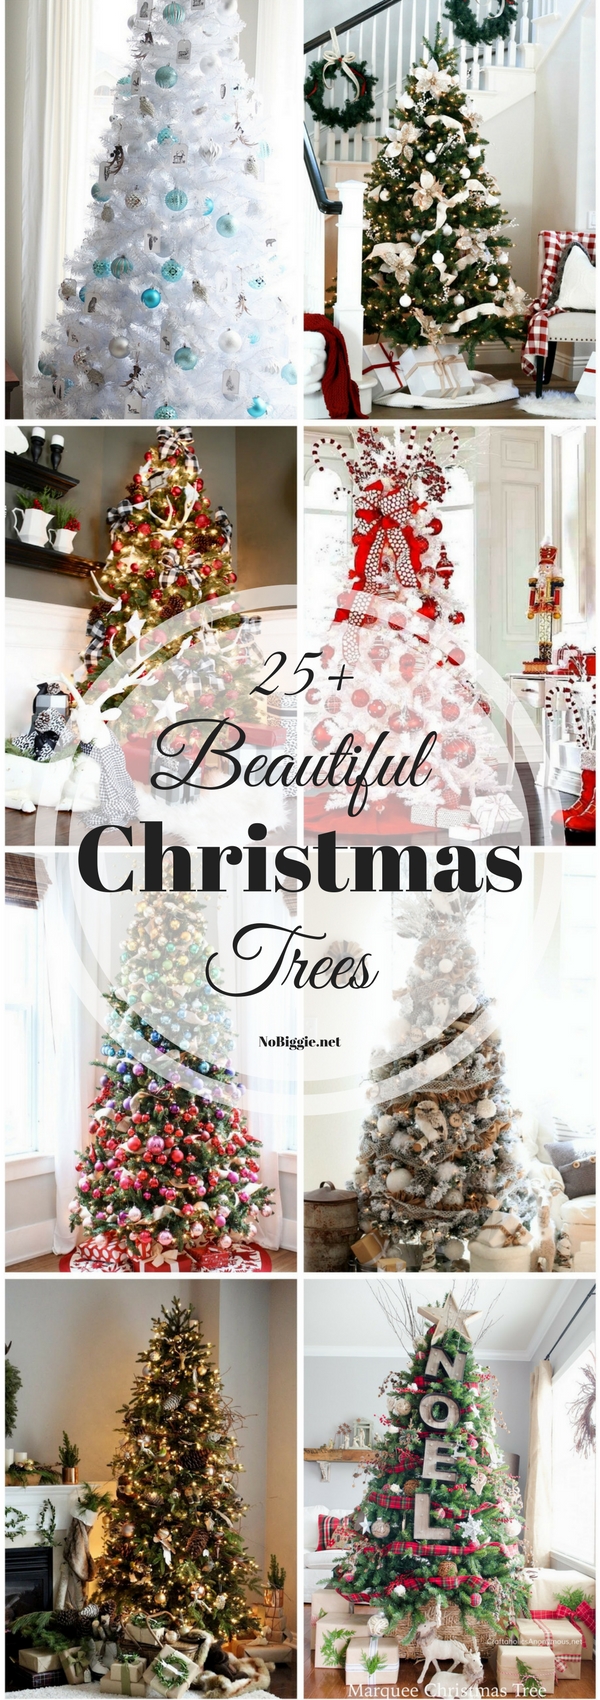 25+ Beautiful Christmas Trees | NoBiggie.com